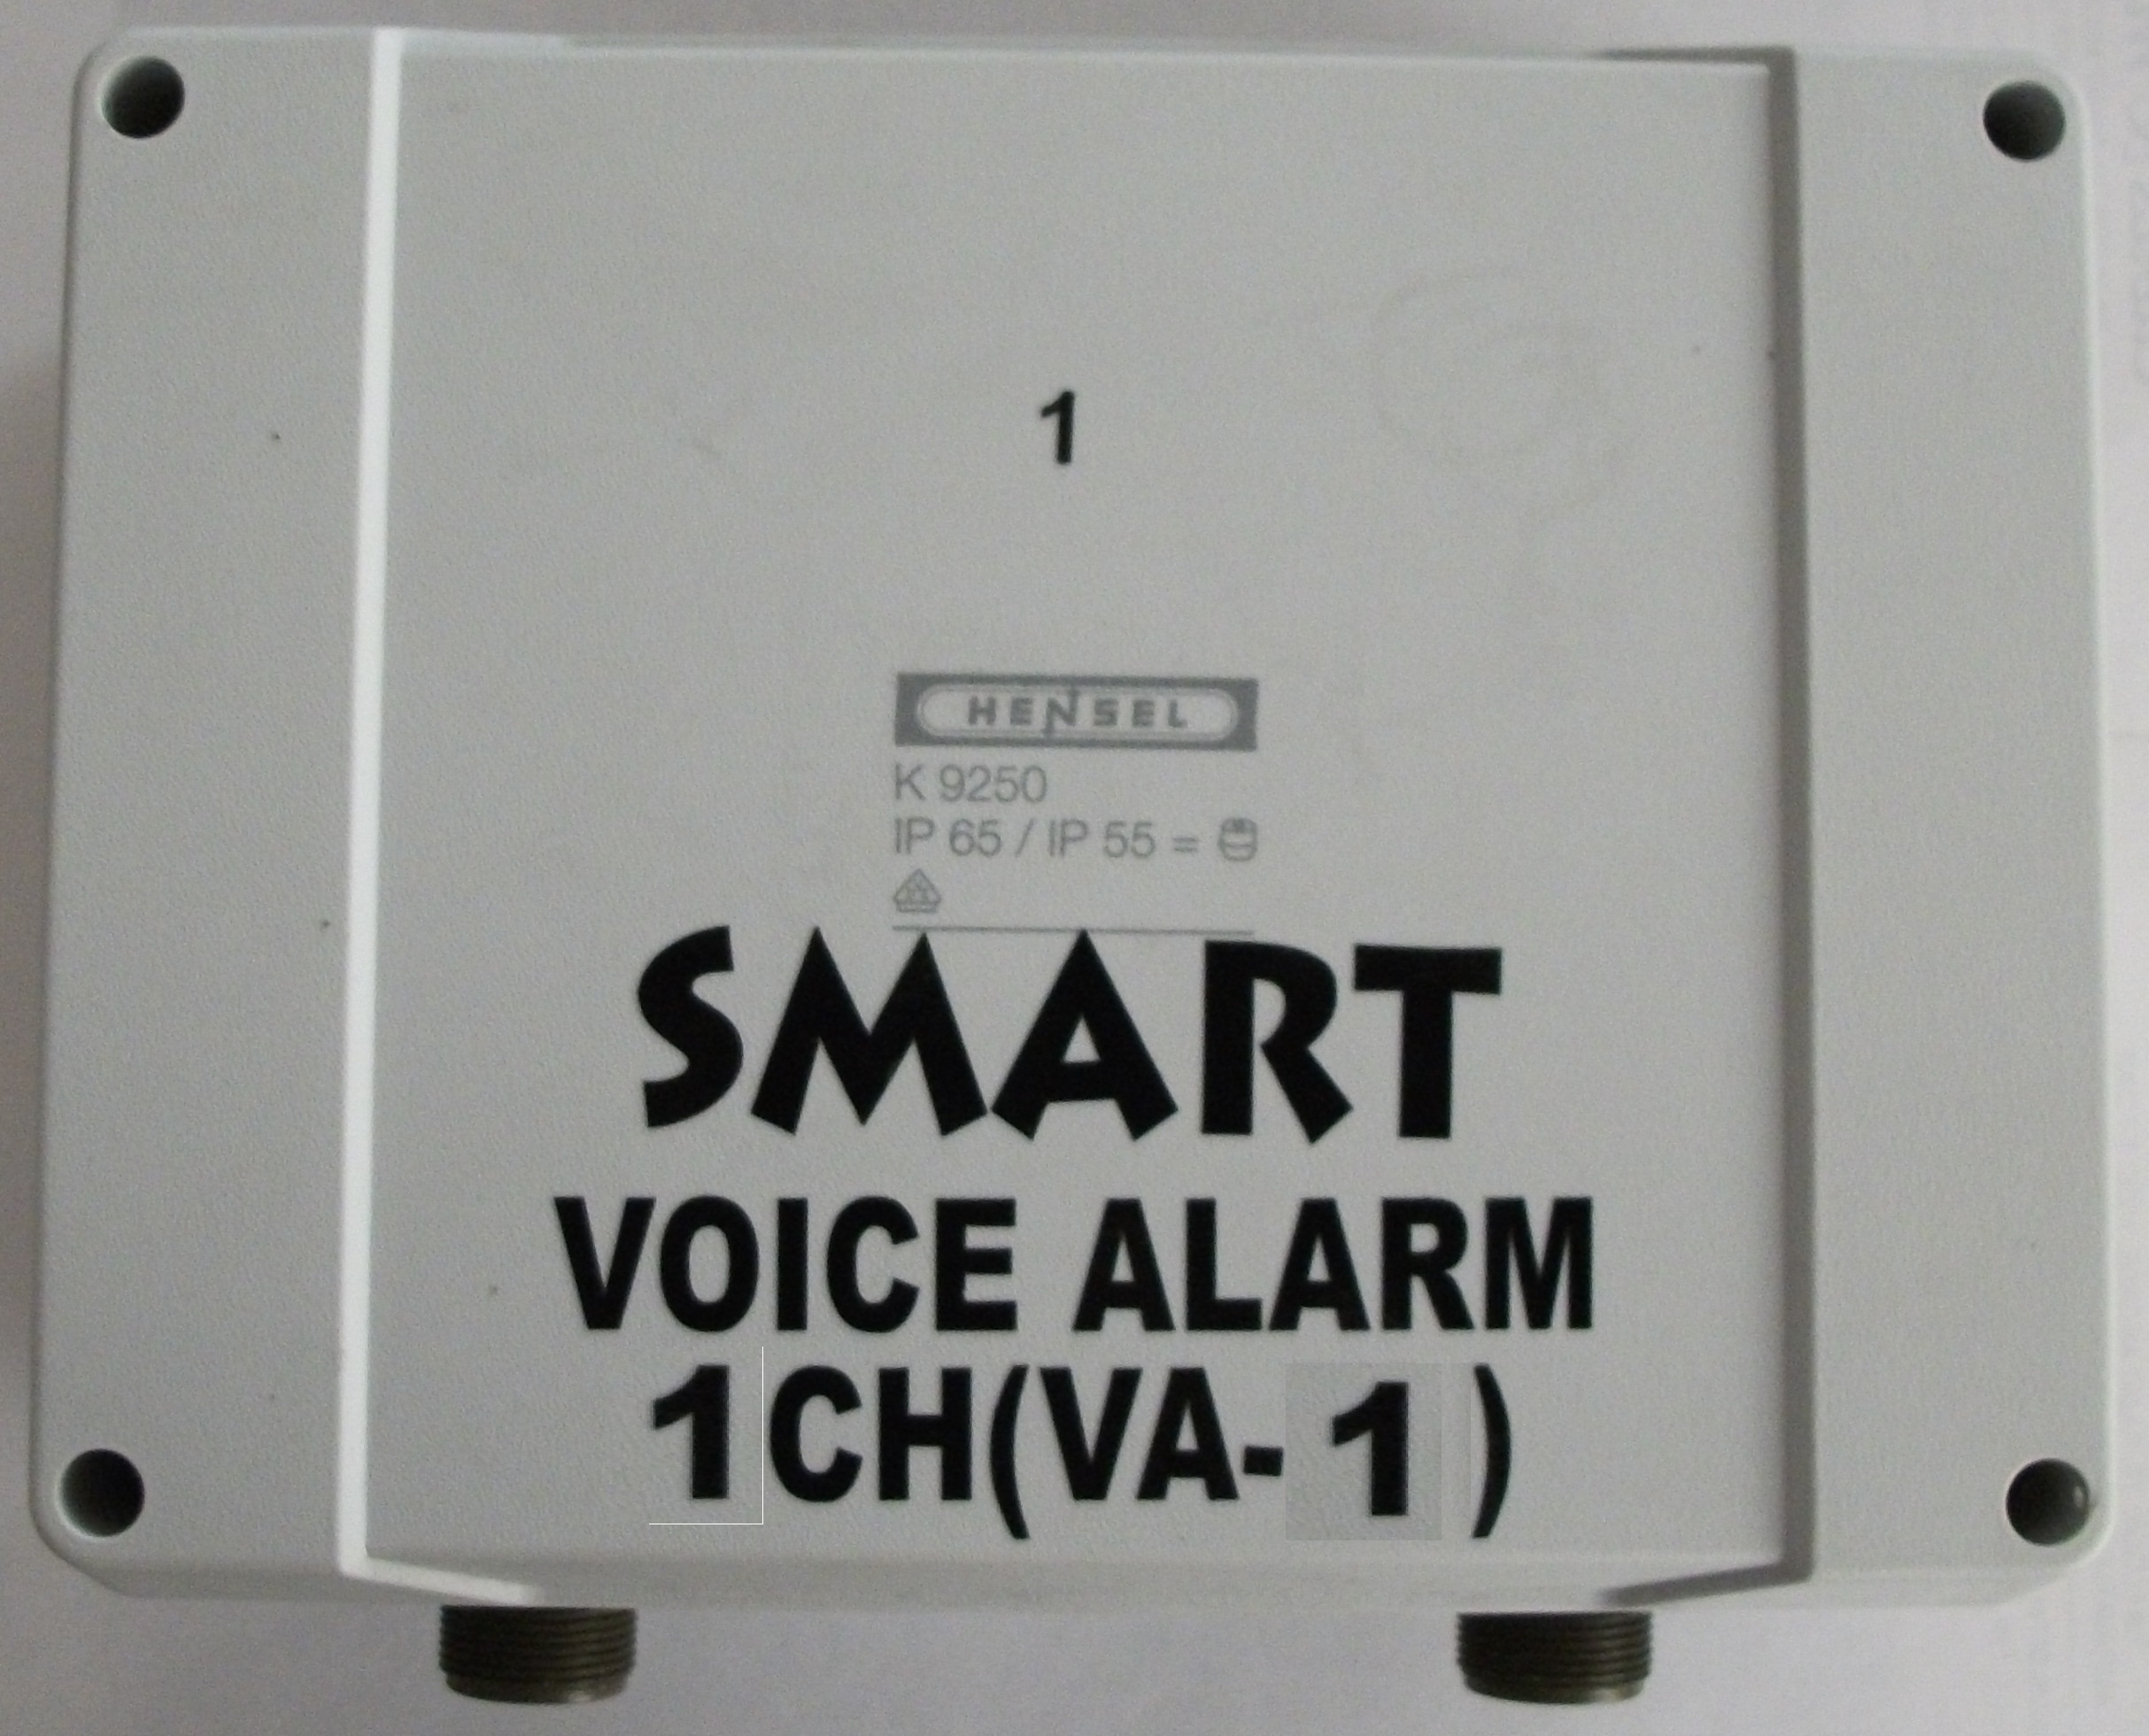 Voice Alarm System